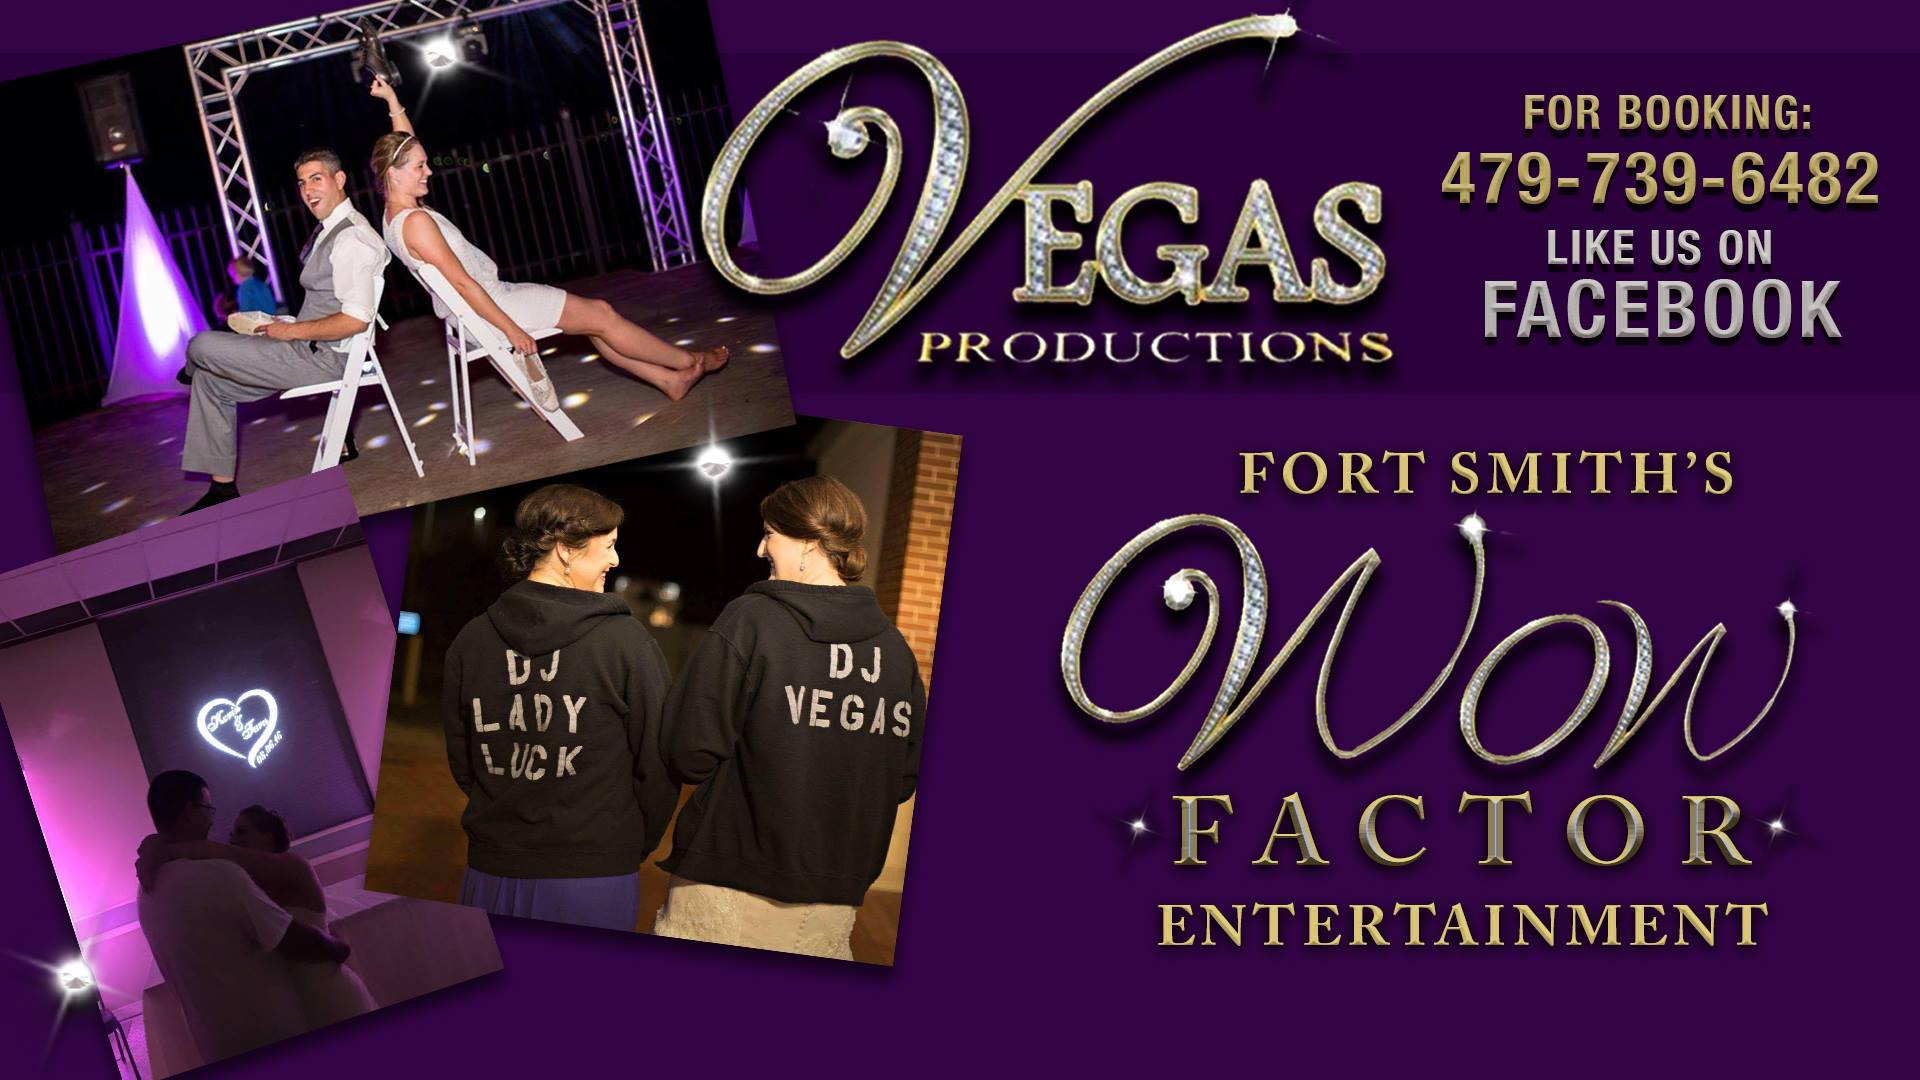 Vegas Productions